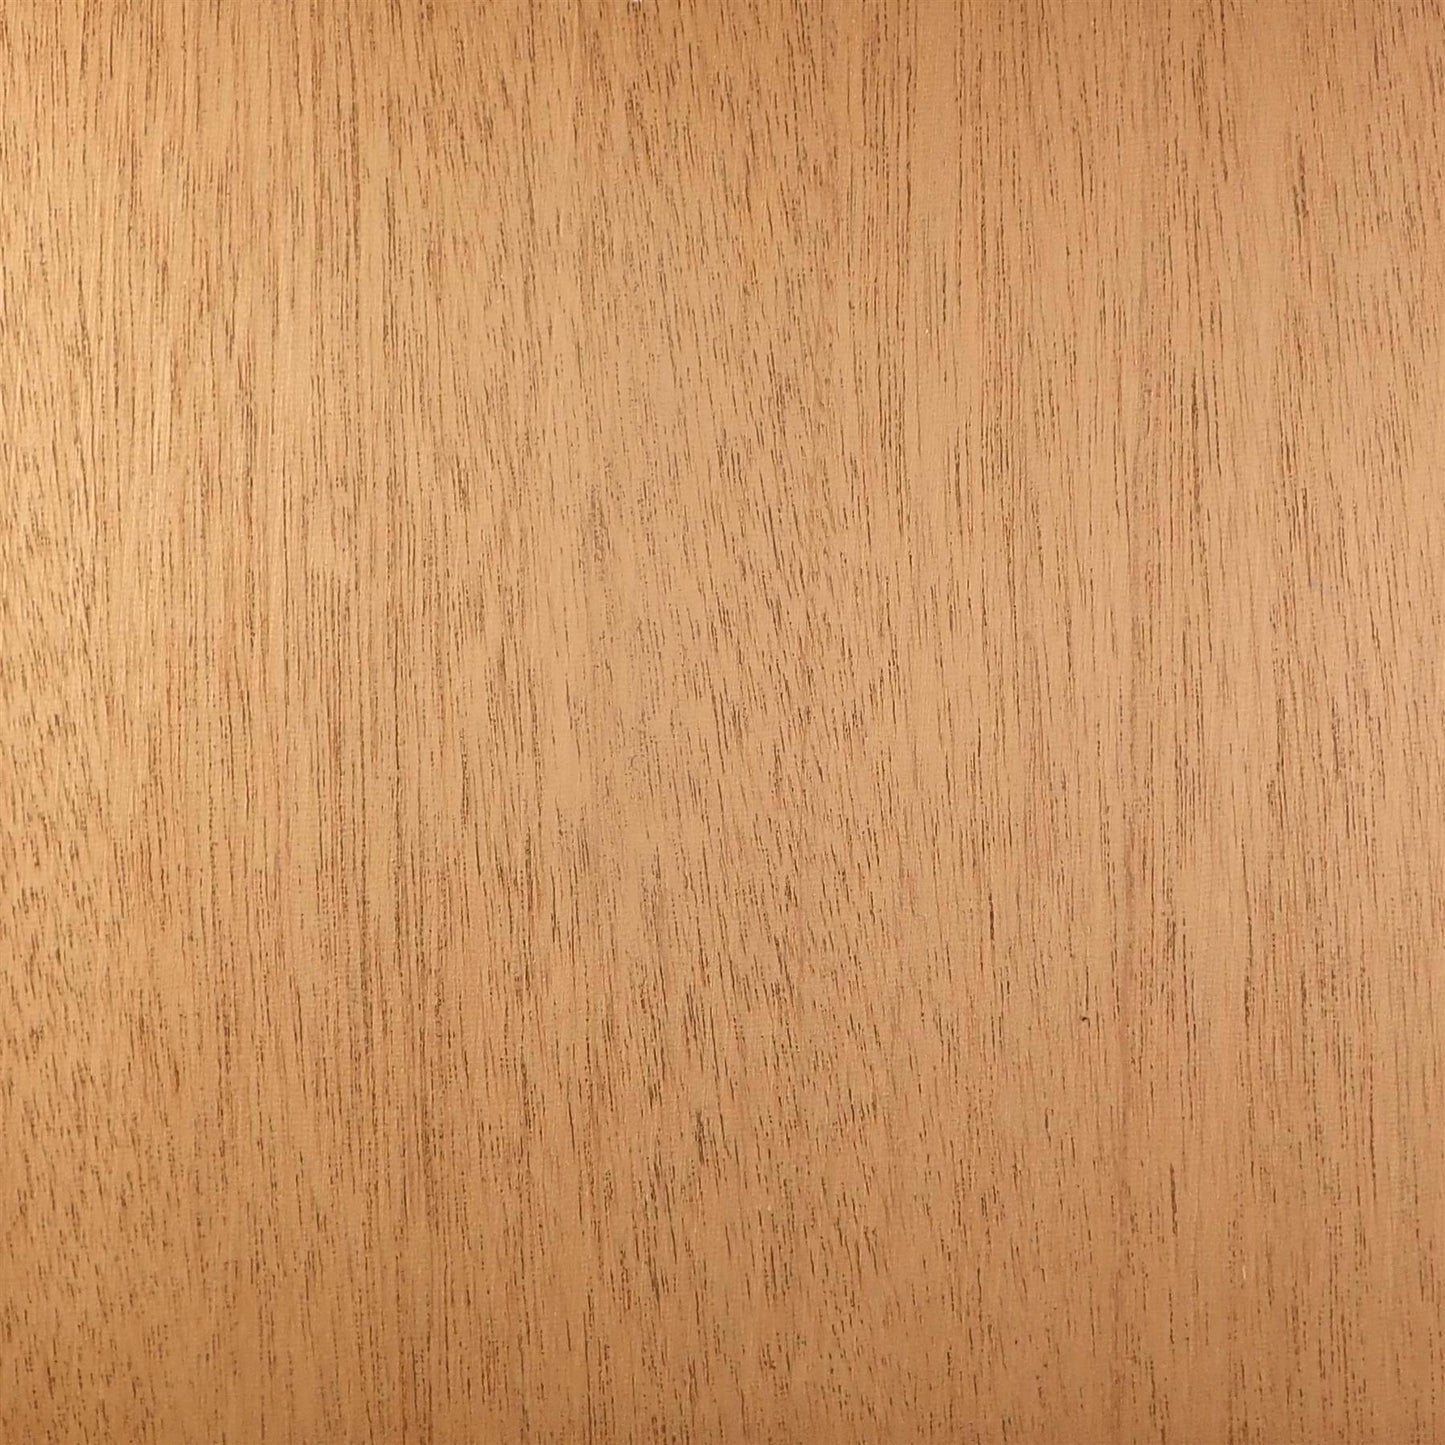 Luthitec Honduran Mahogany Wood Finish Sampler Board - 150x150x4mm (5.9x5.91x0.16")